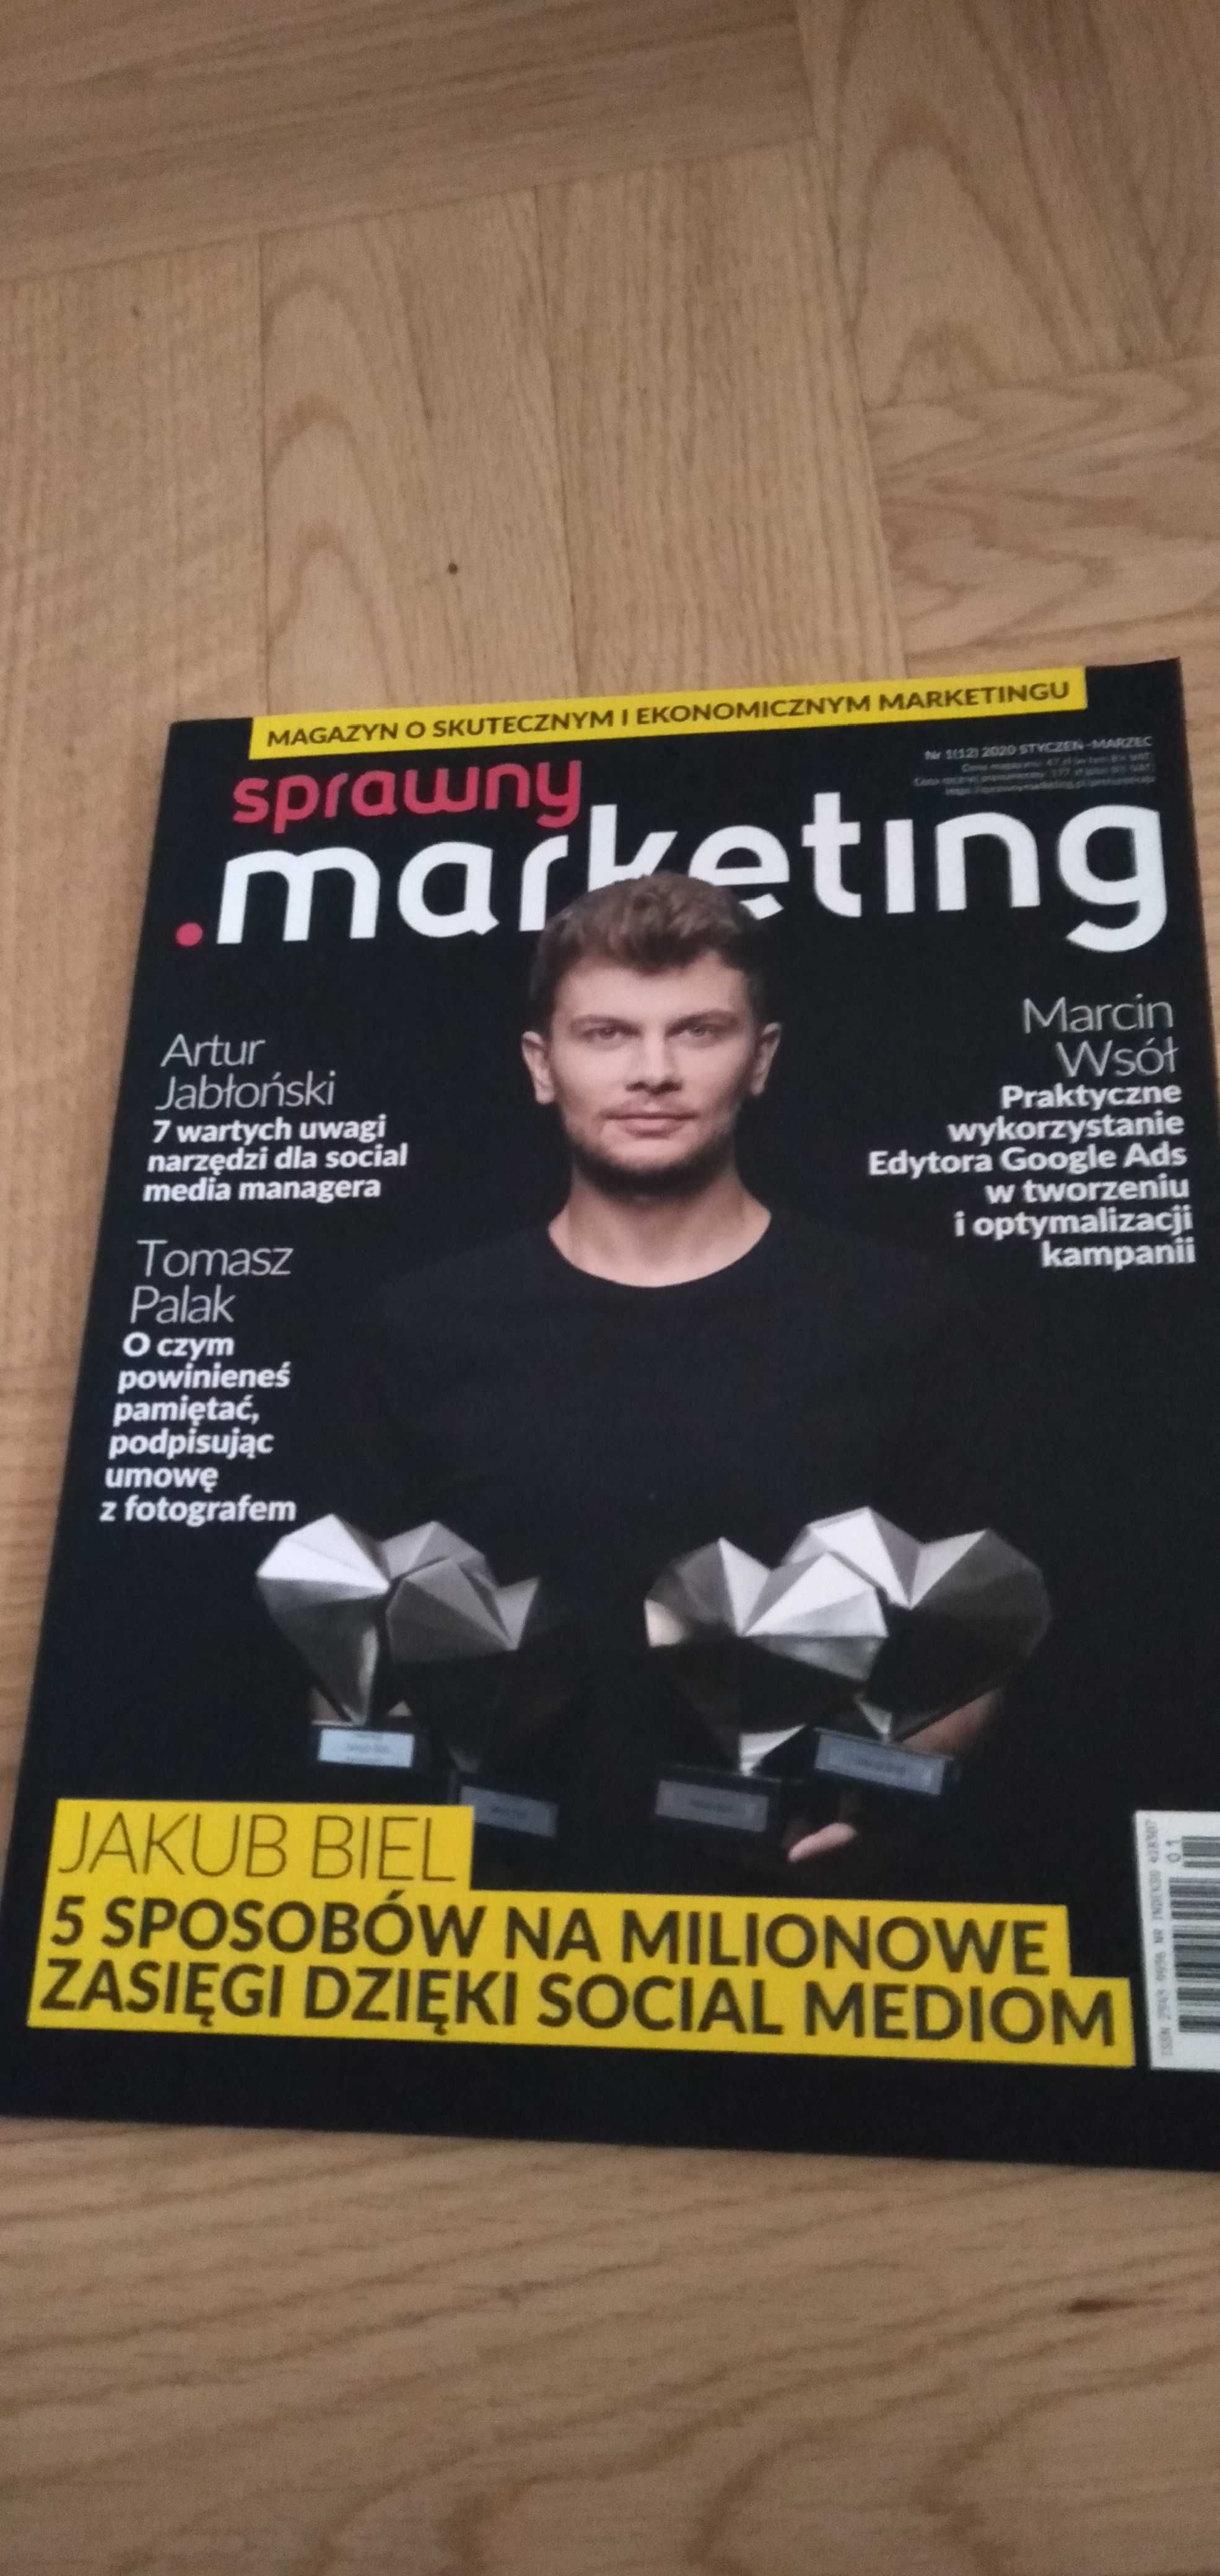 Sprawny marketing magazyn